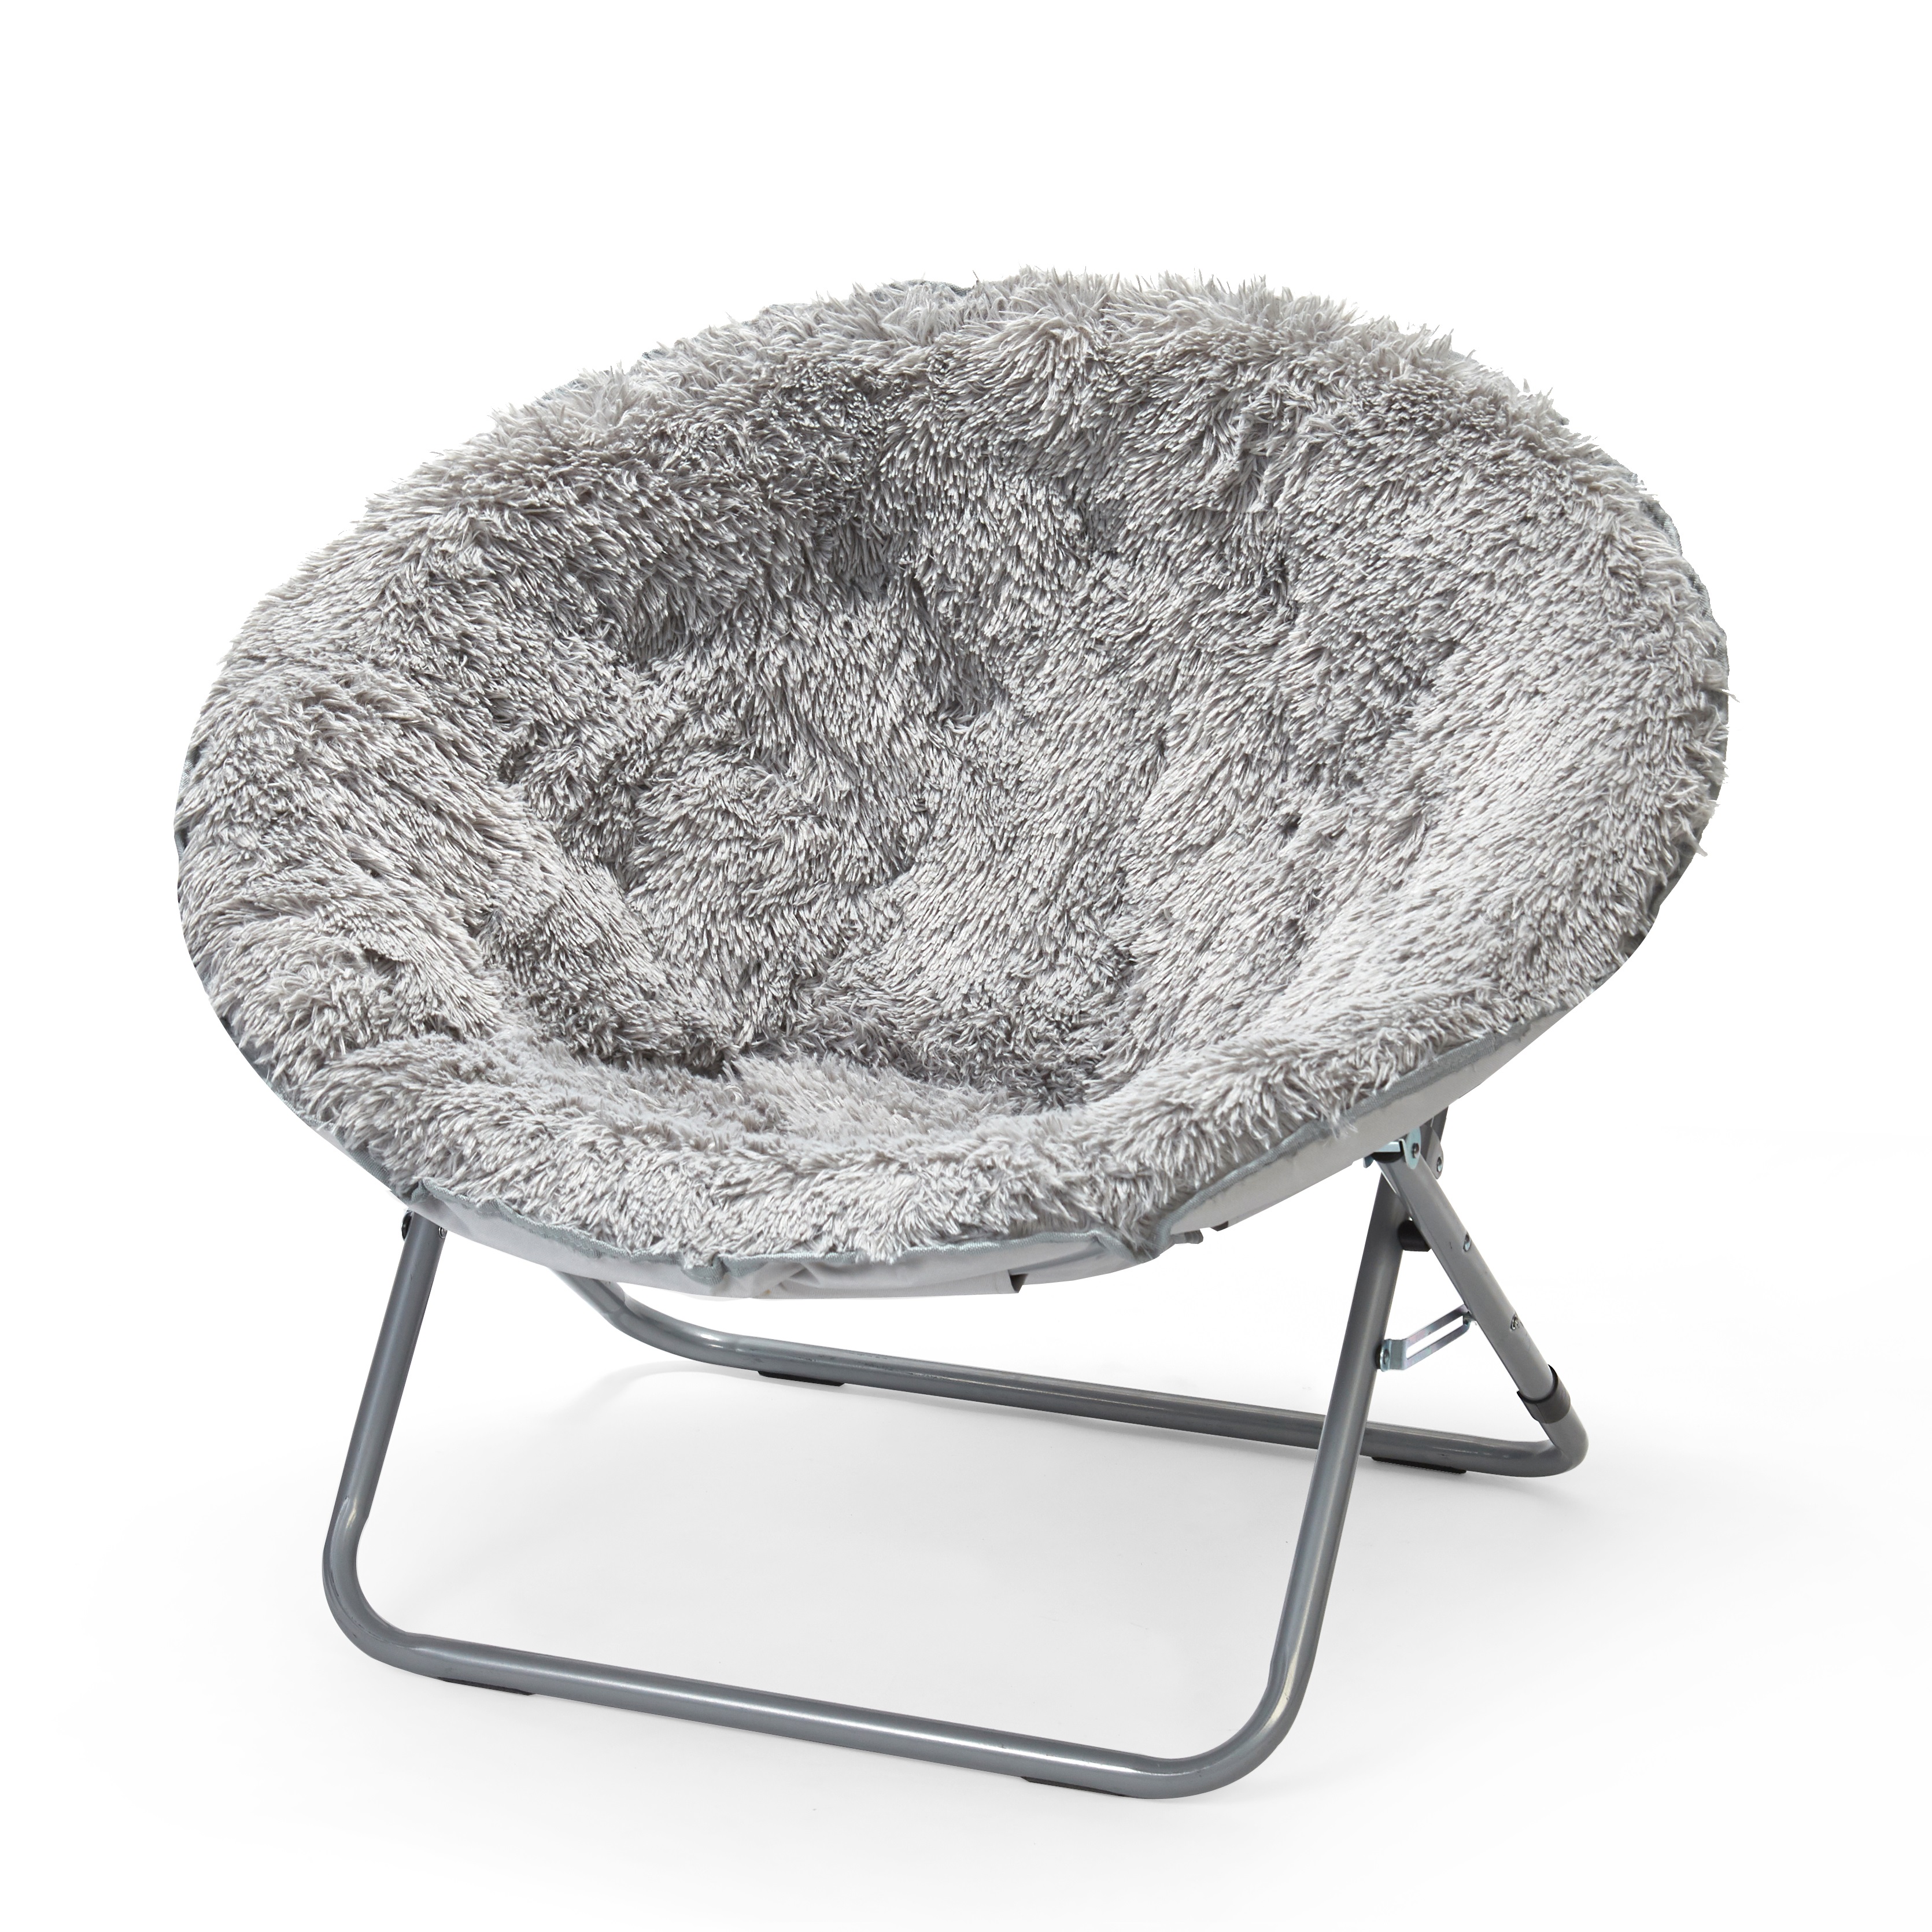 Urban Shop Mongolian Faux Fur Oversized Moon Chair, Silver - image 5 of 5